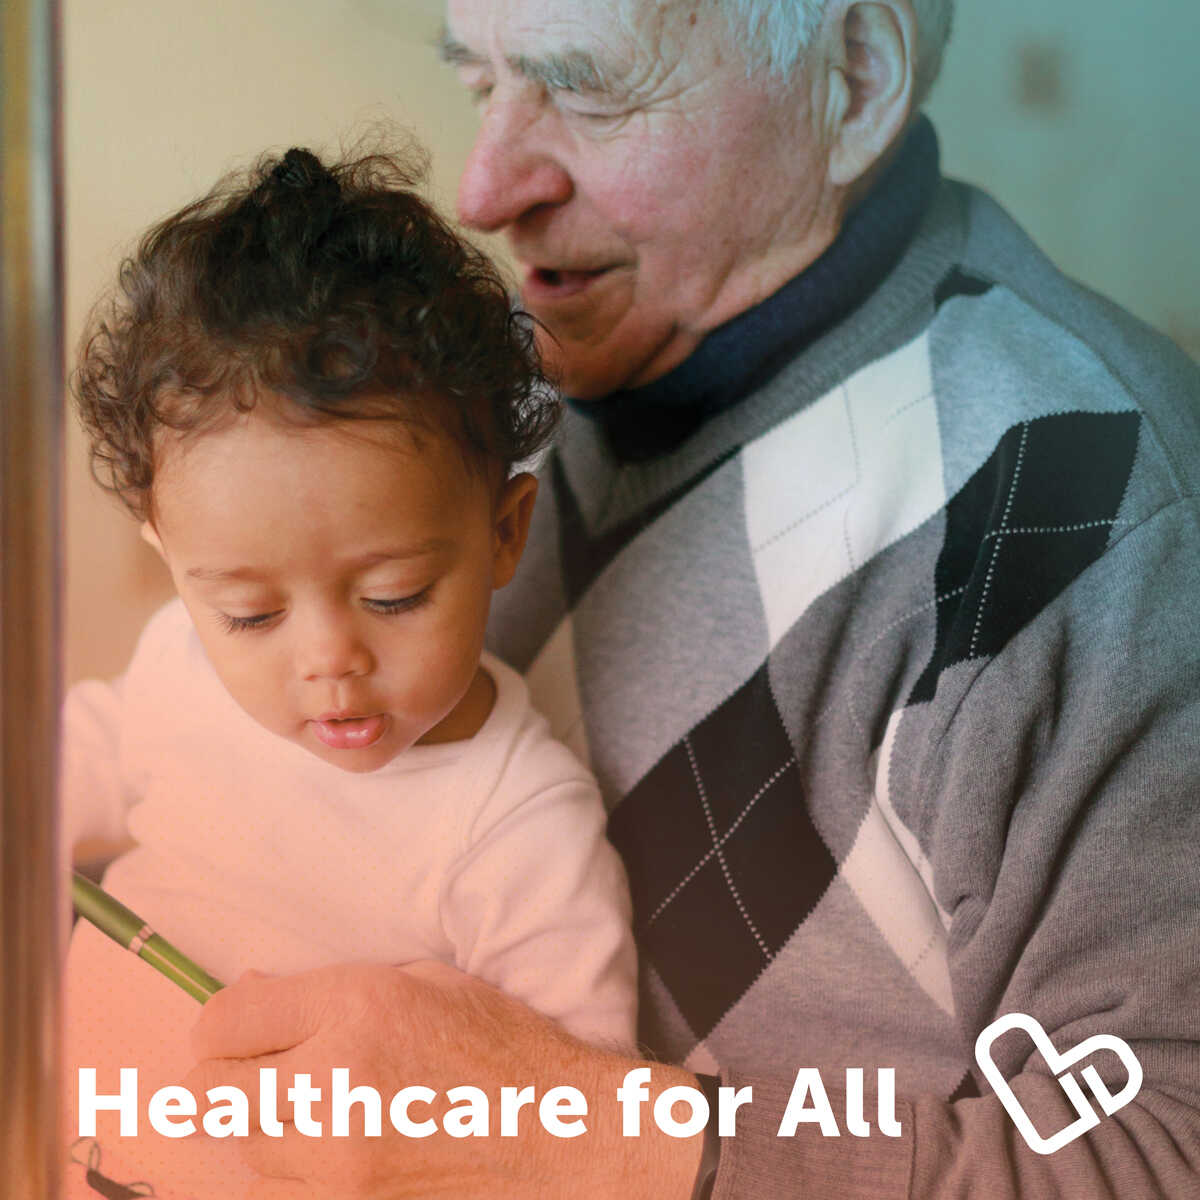 Healthcare for all - photo of grandparent and grandchild